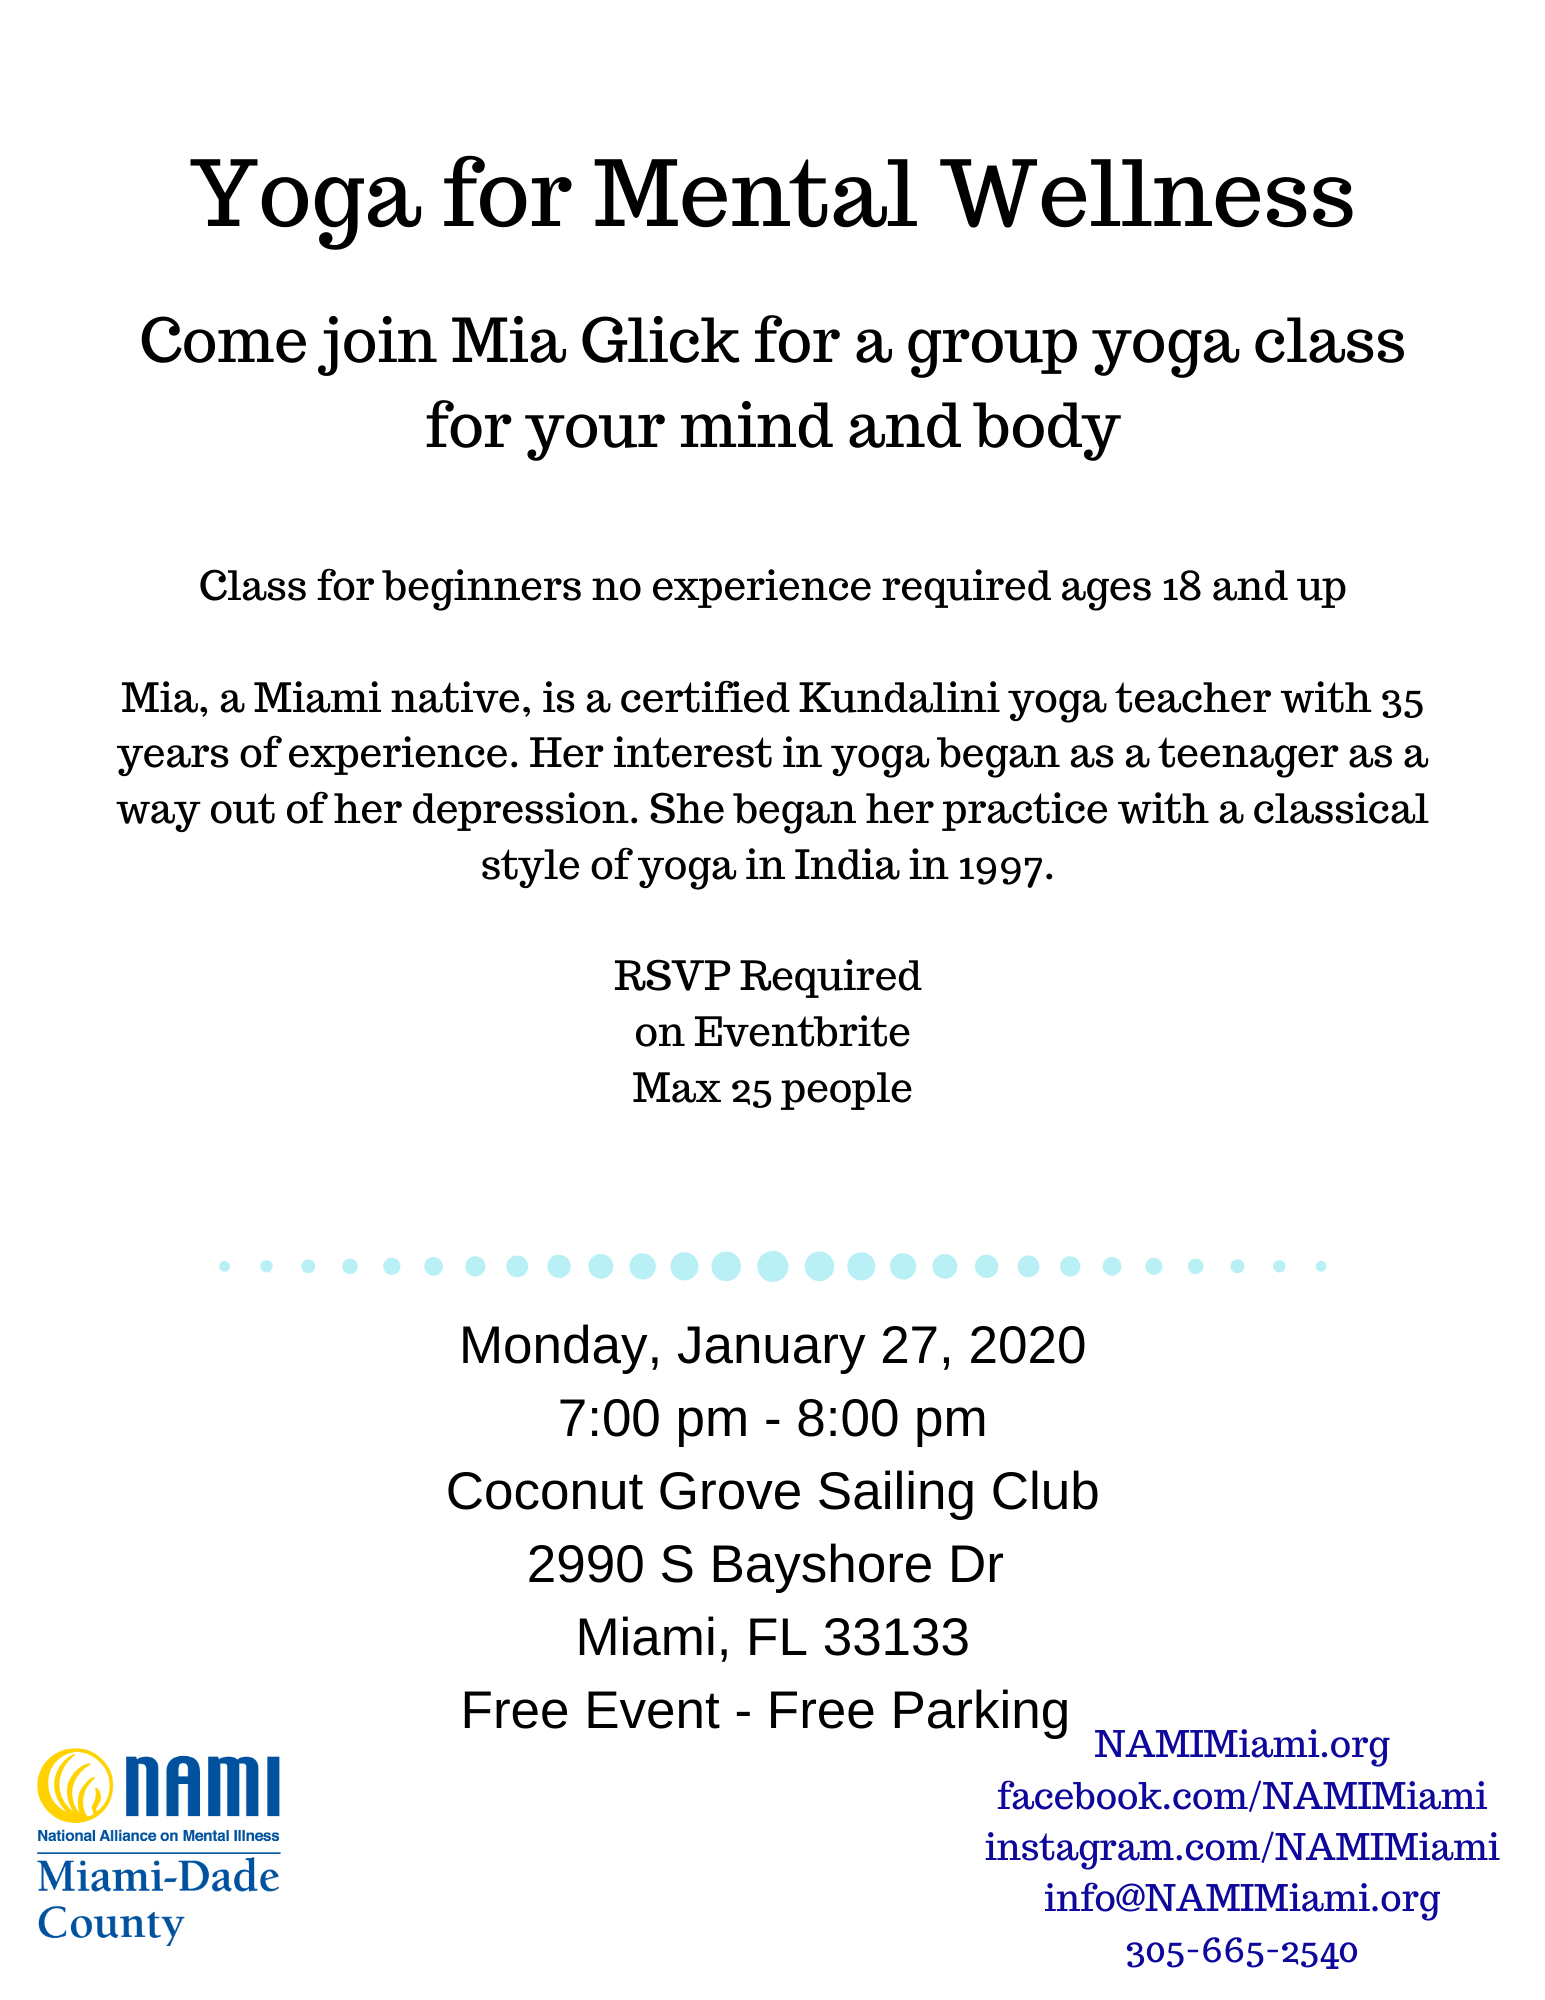 Yoga for Mental Health with MIa Glick